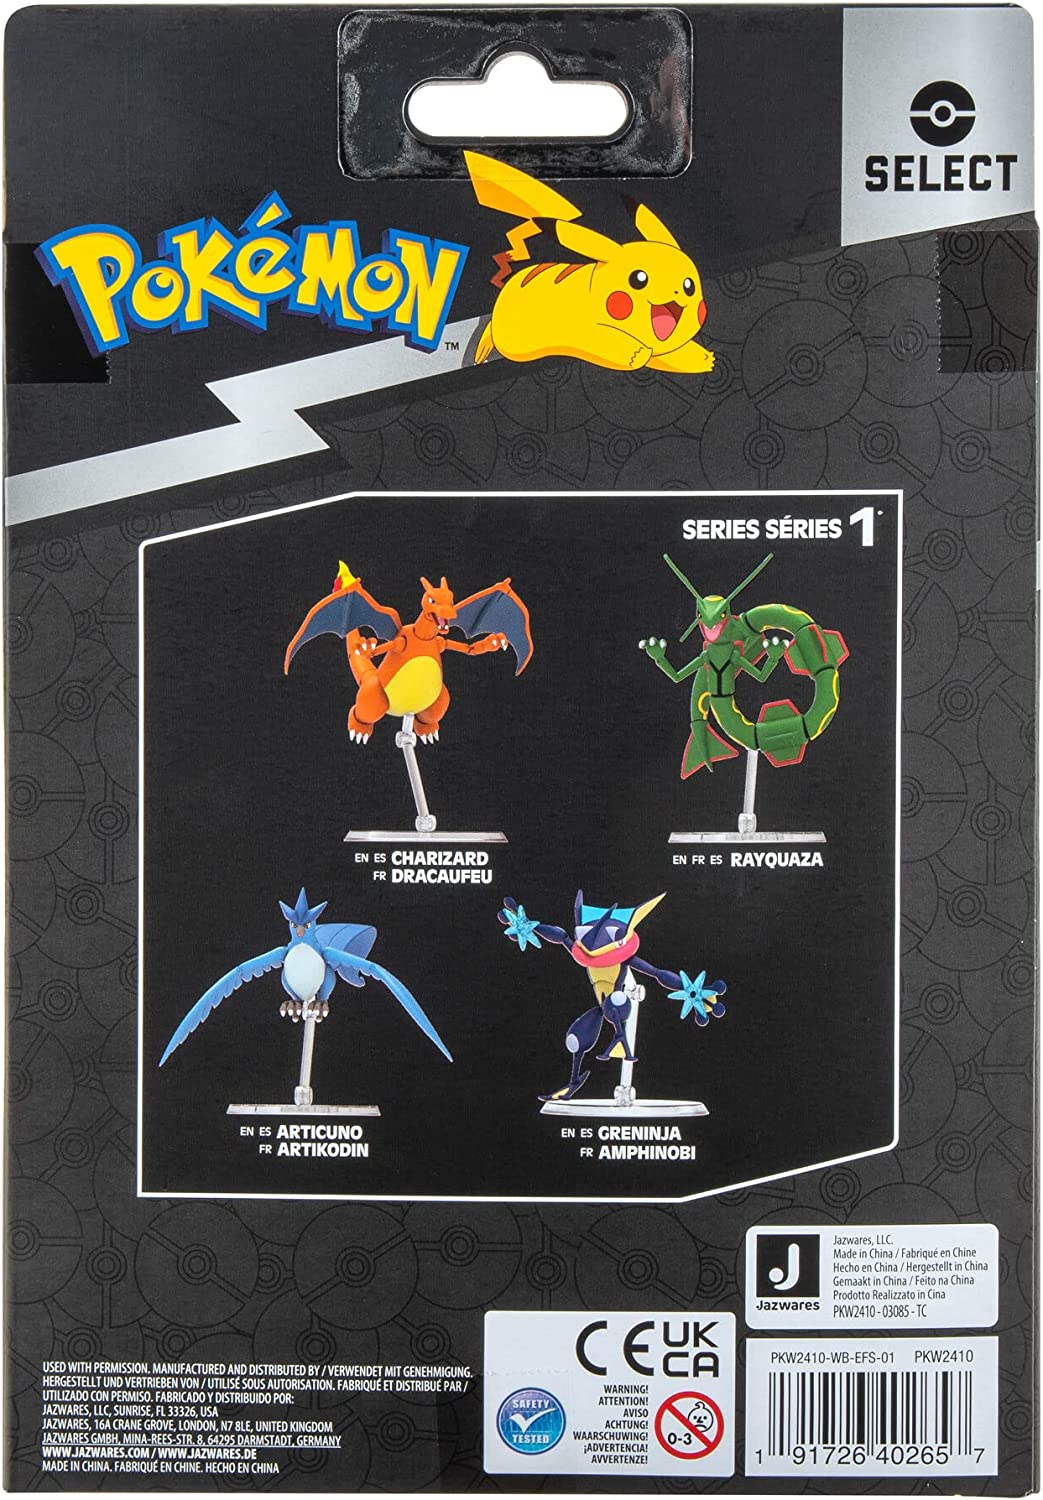  Pokémon Pokemon Articuno, Super-Articulated 6-Inch